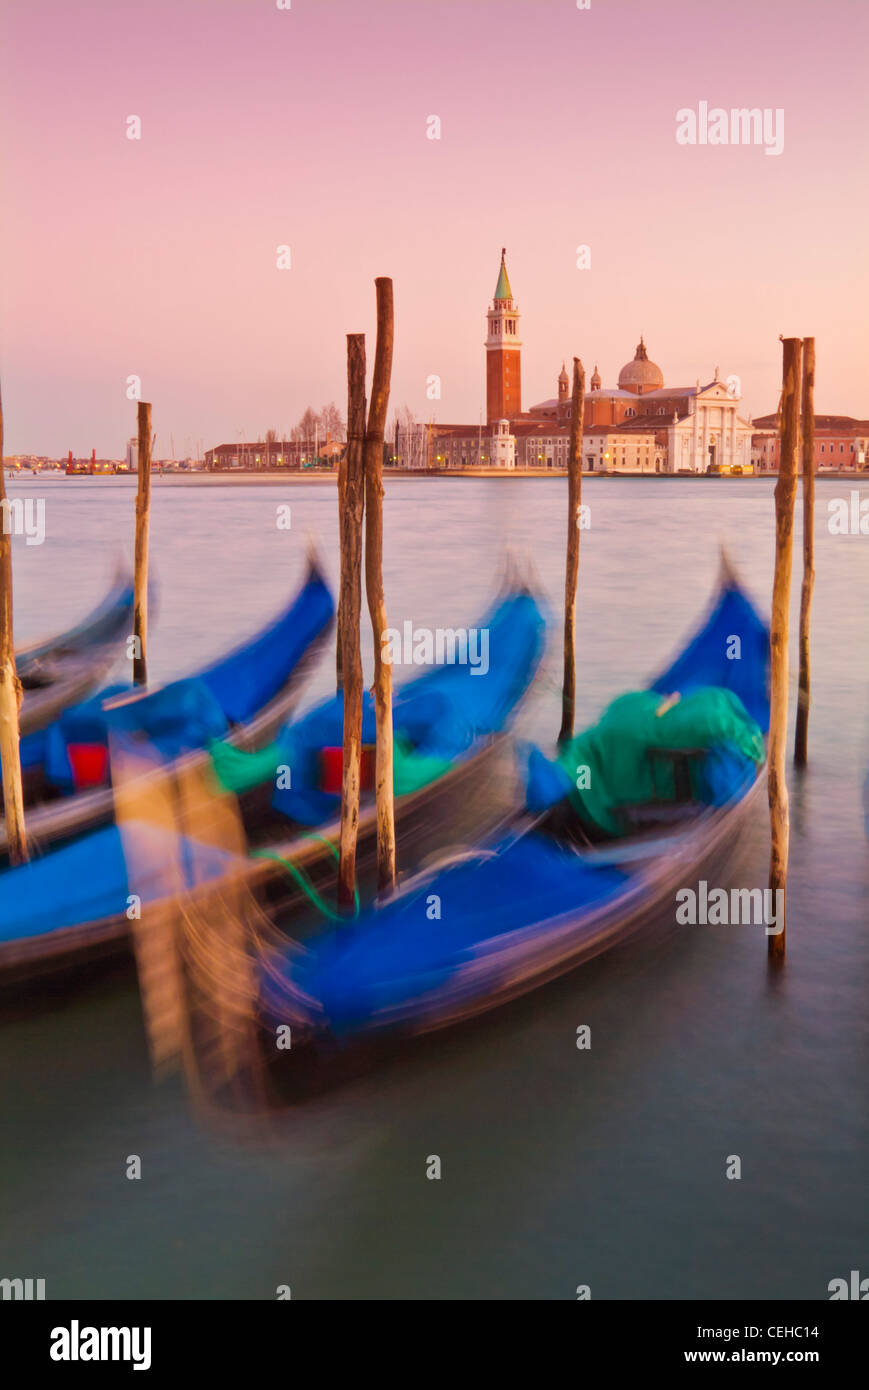 Venice Gondolas moored at night in the Bacino di san Marco, St Mark's Basin, waterfront, Venice, Italy, EU, Europe Stock Photo